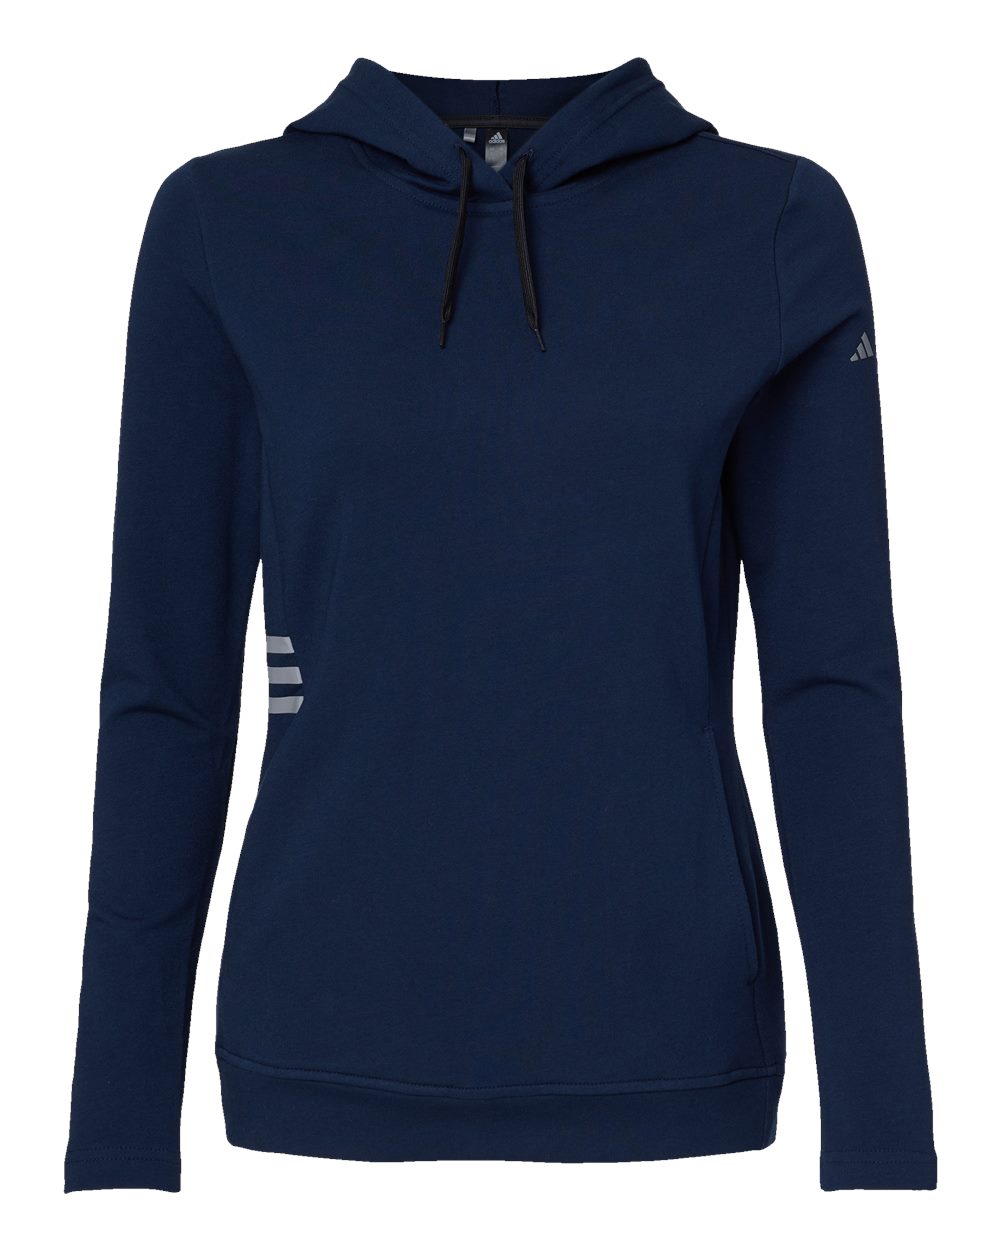 Adidas Women's Lightweight Hooded Sweatshirt